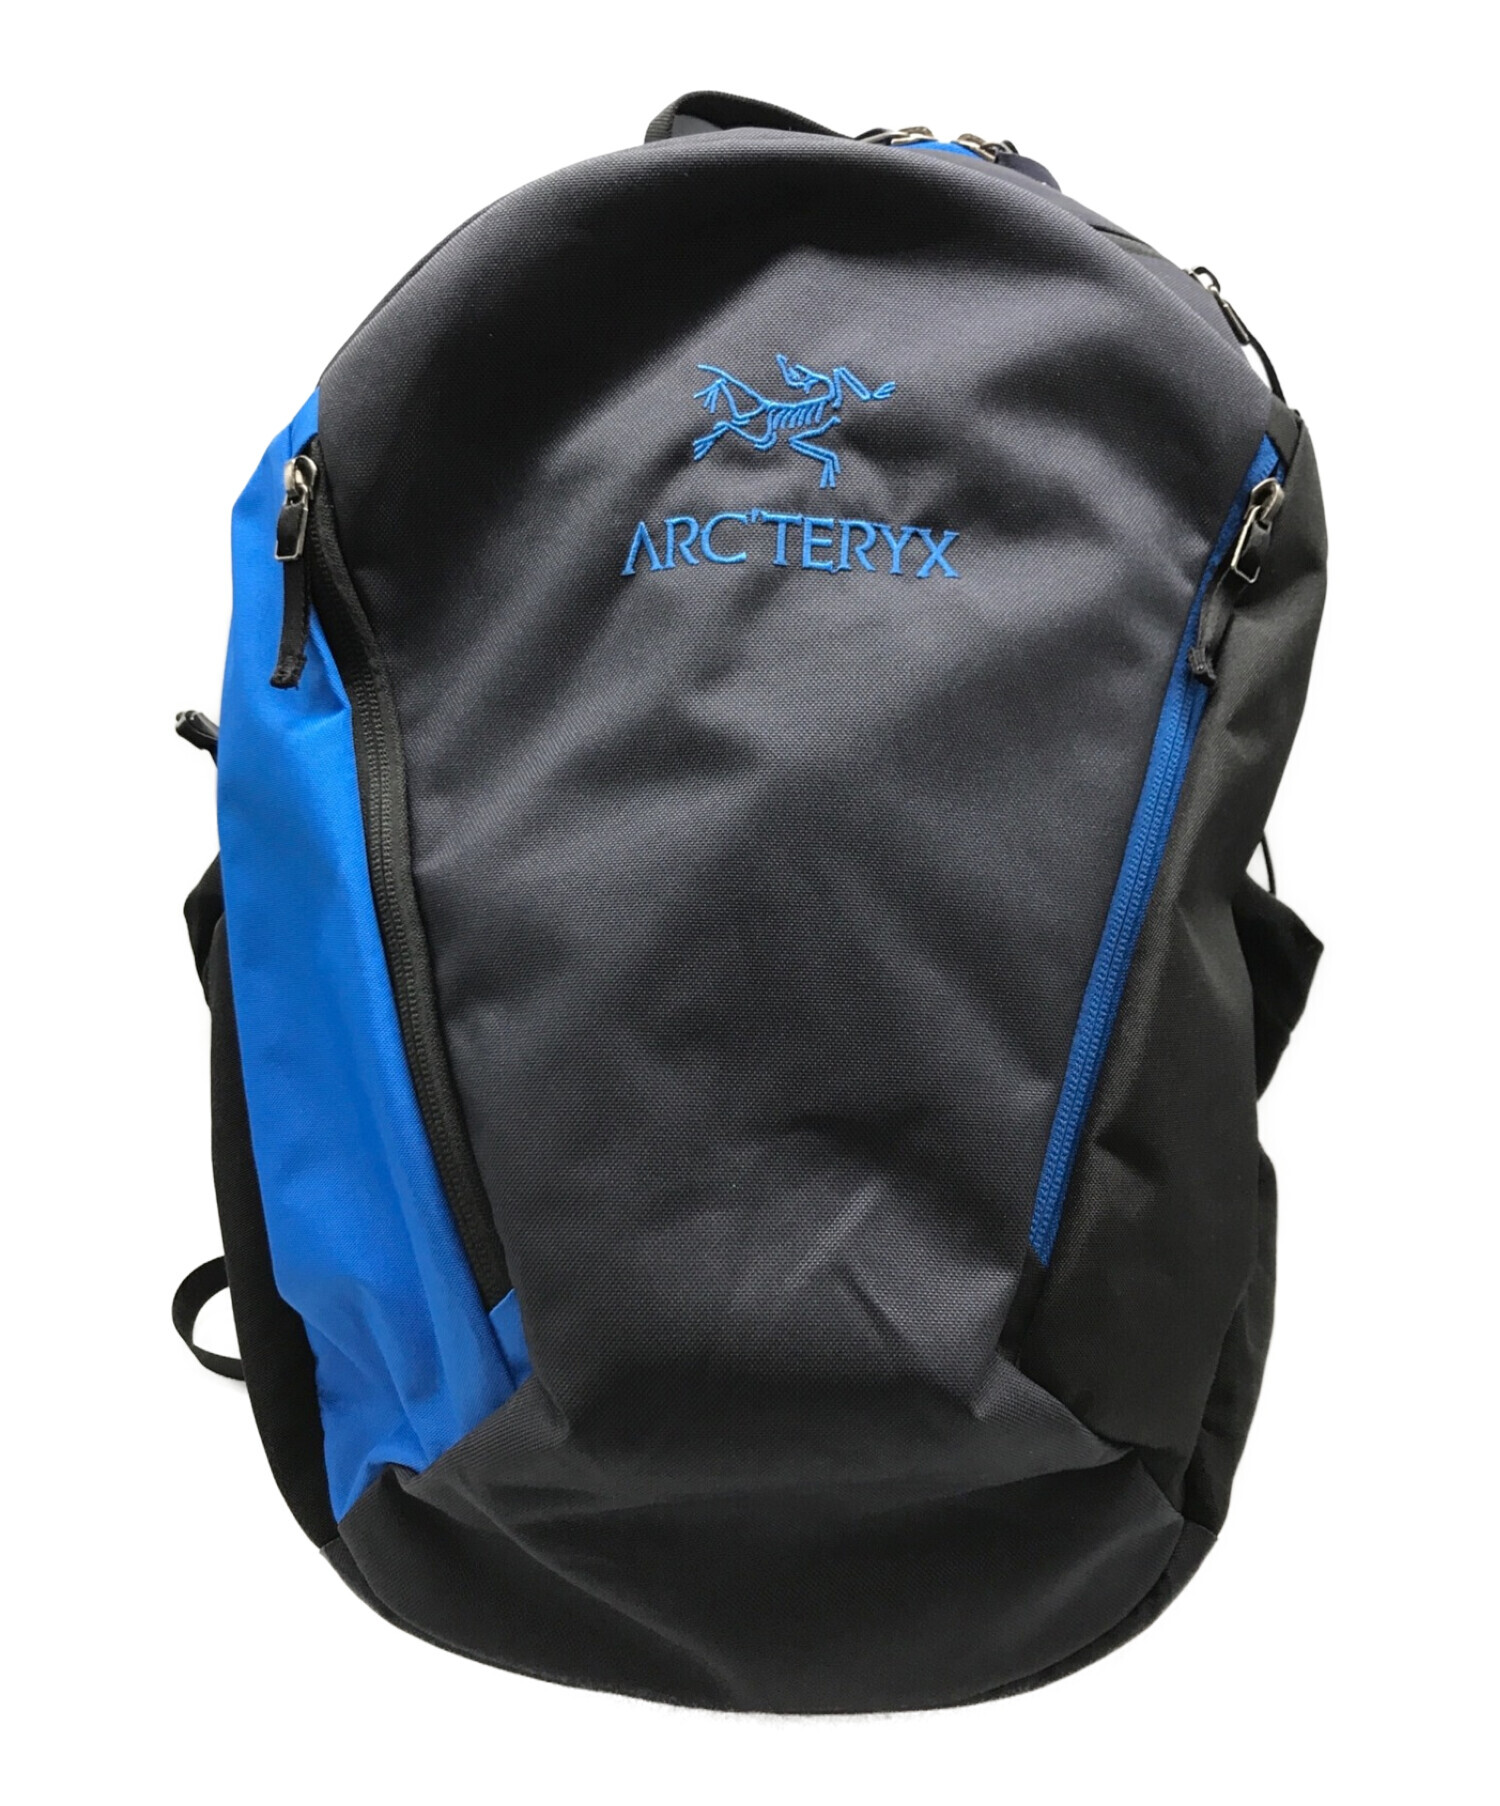 ARC'TERYX (アークテリクス) BEAMS (ビームス) mantis 26 backpack　30315 ネイビー×ブルー